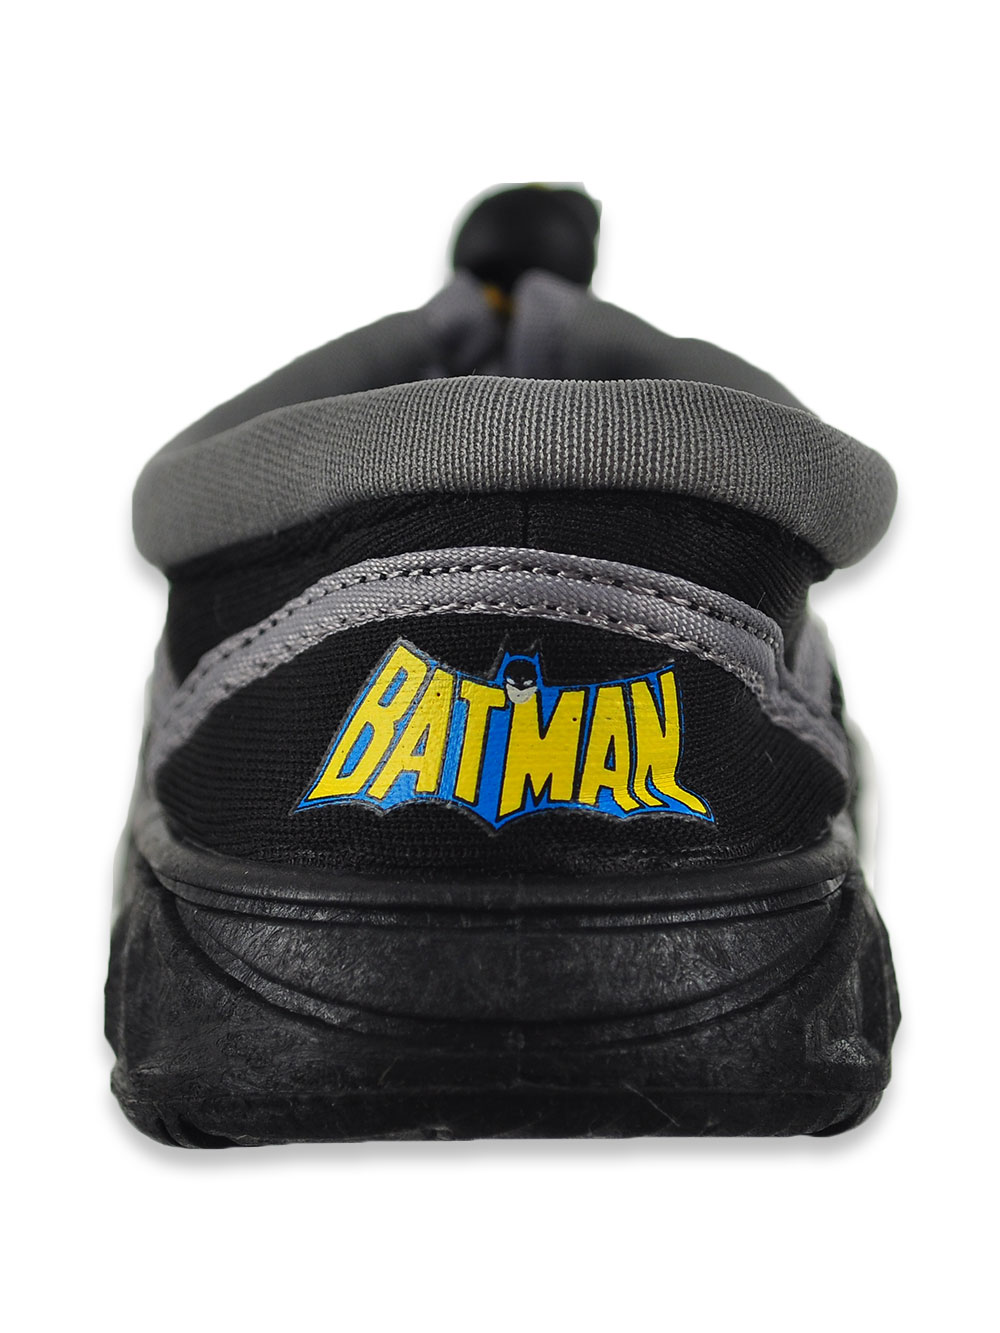 batman swim shoes